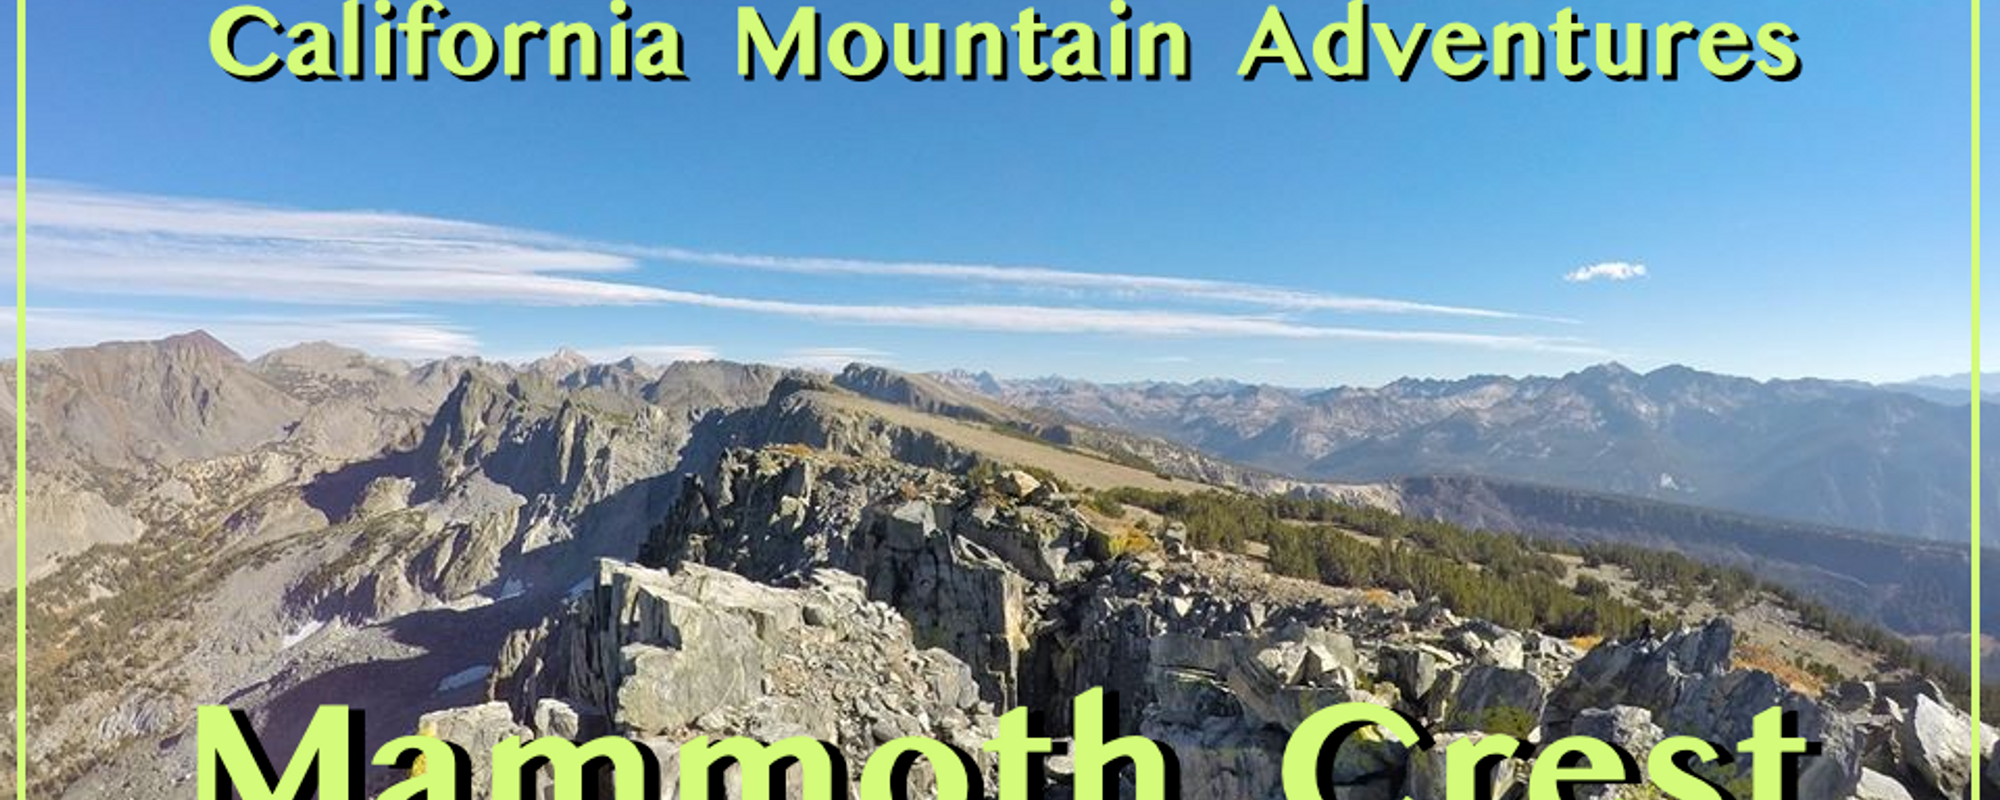 California Mountain Adventures - Mammoth Crest